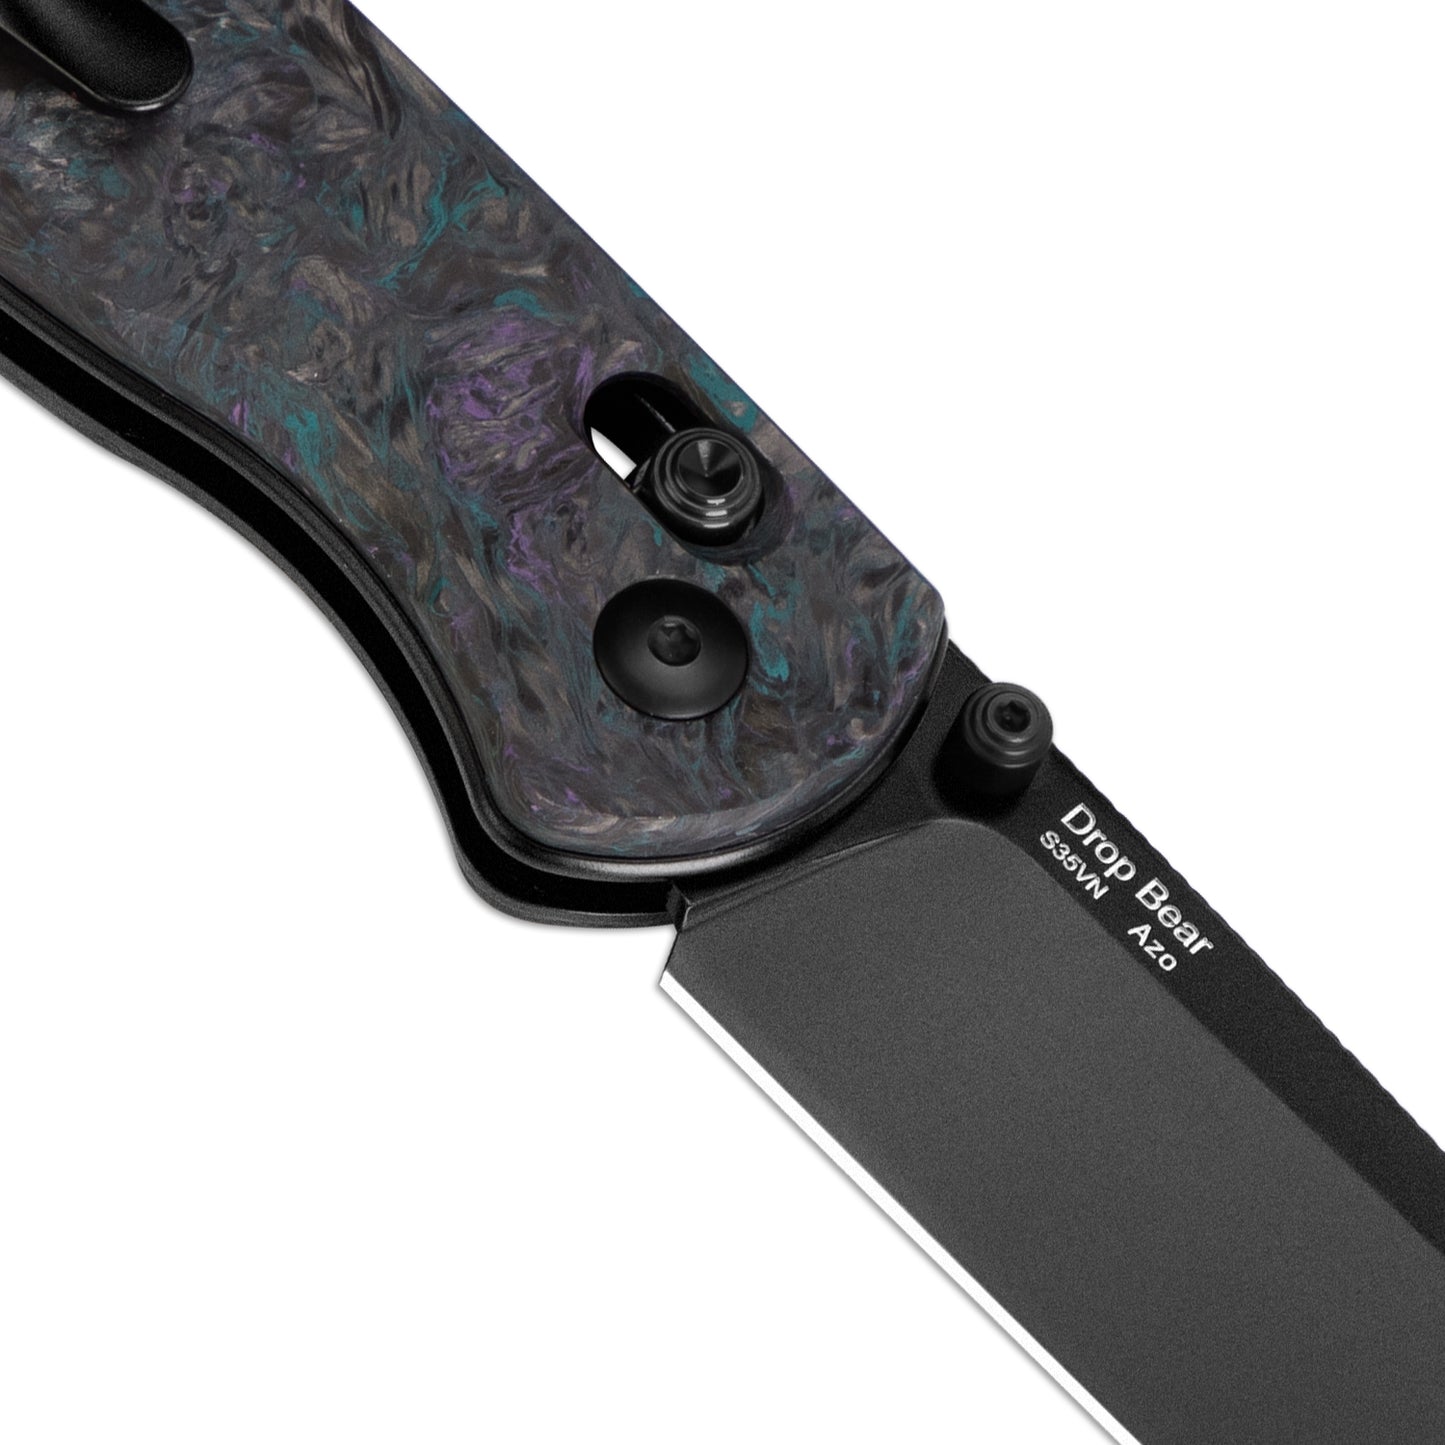 Kizer Drop Bear Clutch-Lock 2.99" S35VN Medusa Fatcarbon Folding Knife Ki3619A4